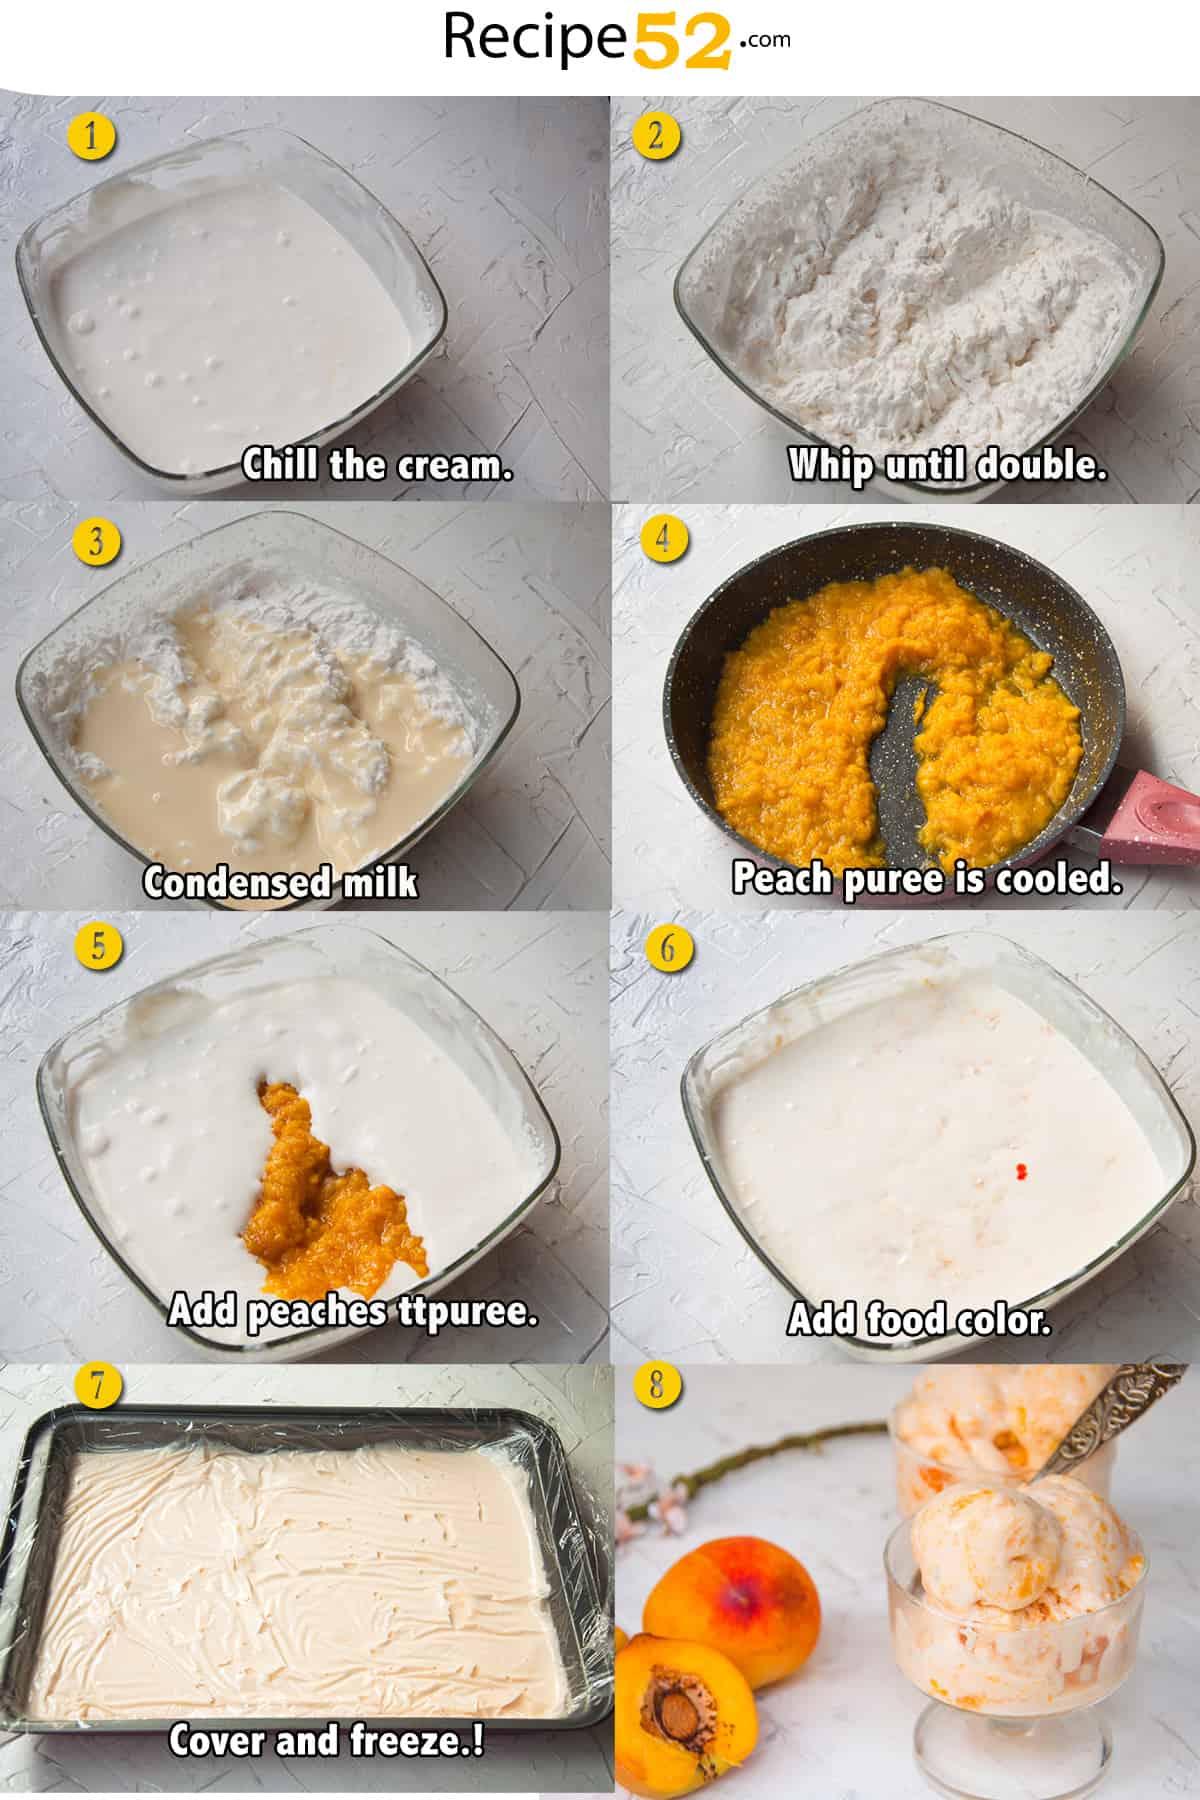 Steps to make Peach Ice Cream